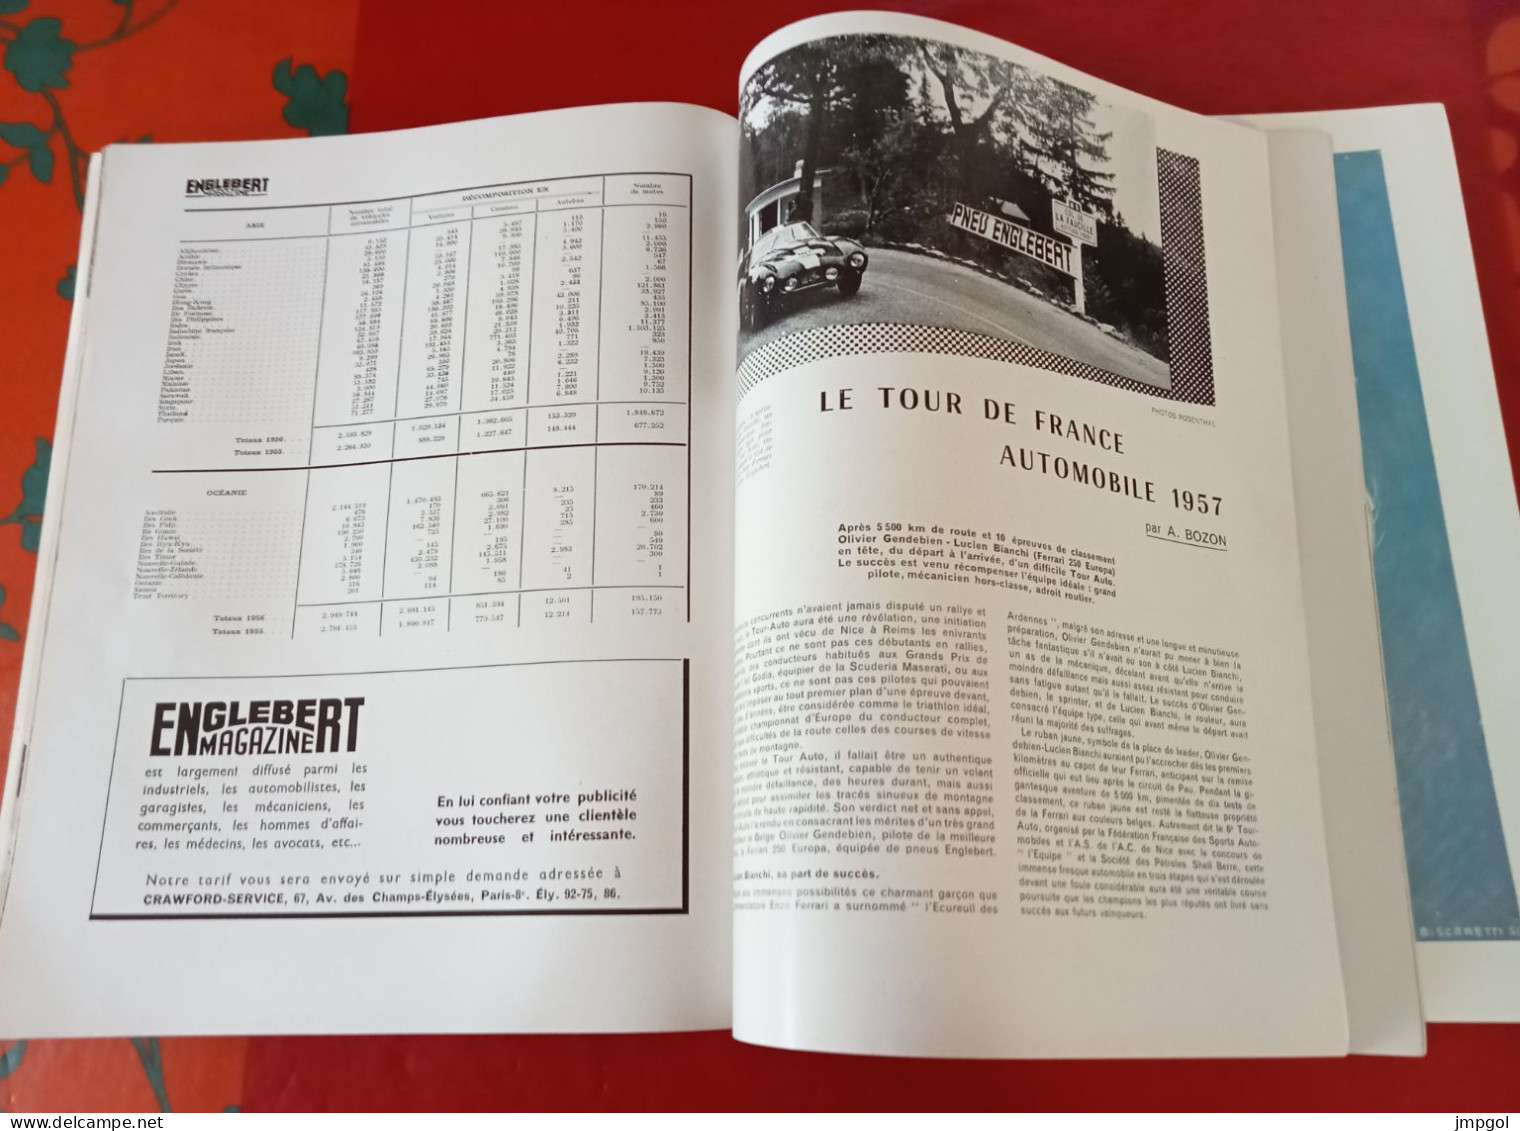 Englebert Magazine n°92 Nov 1957 Salon Paris Auto Poids Lourds Moto Tourisme Velay Vivarais Expo Bruxelles 1958